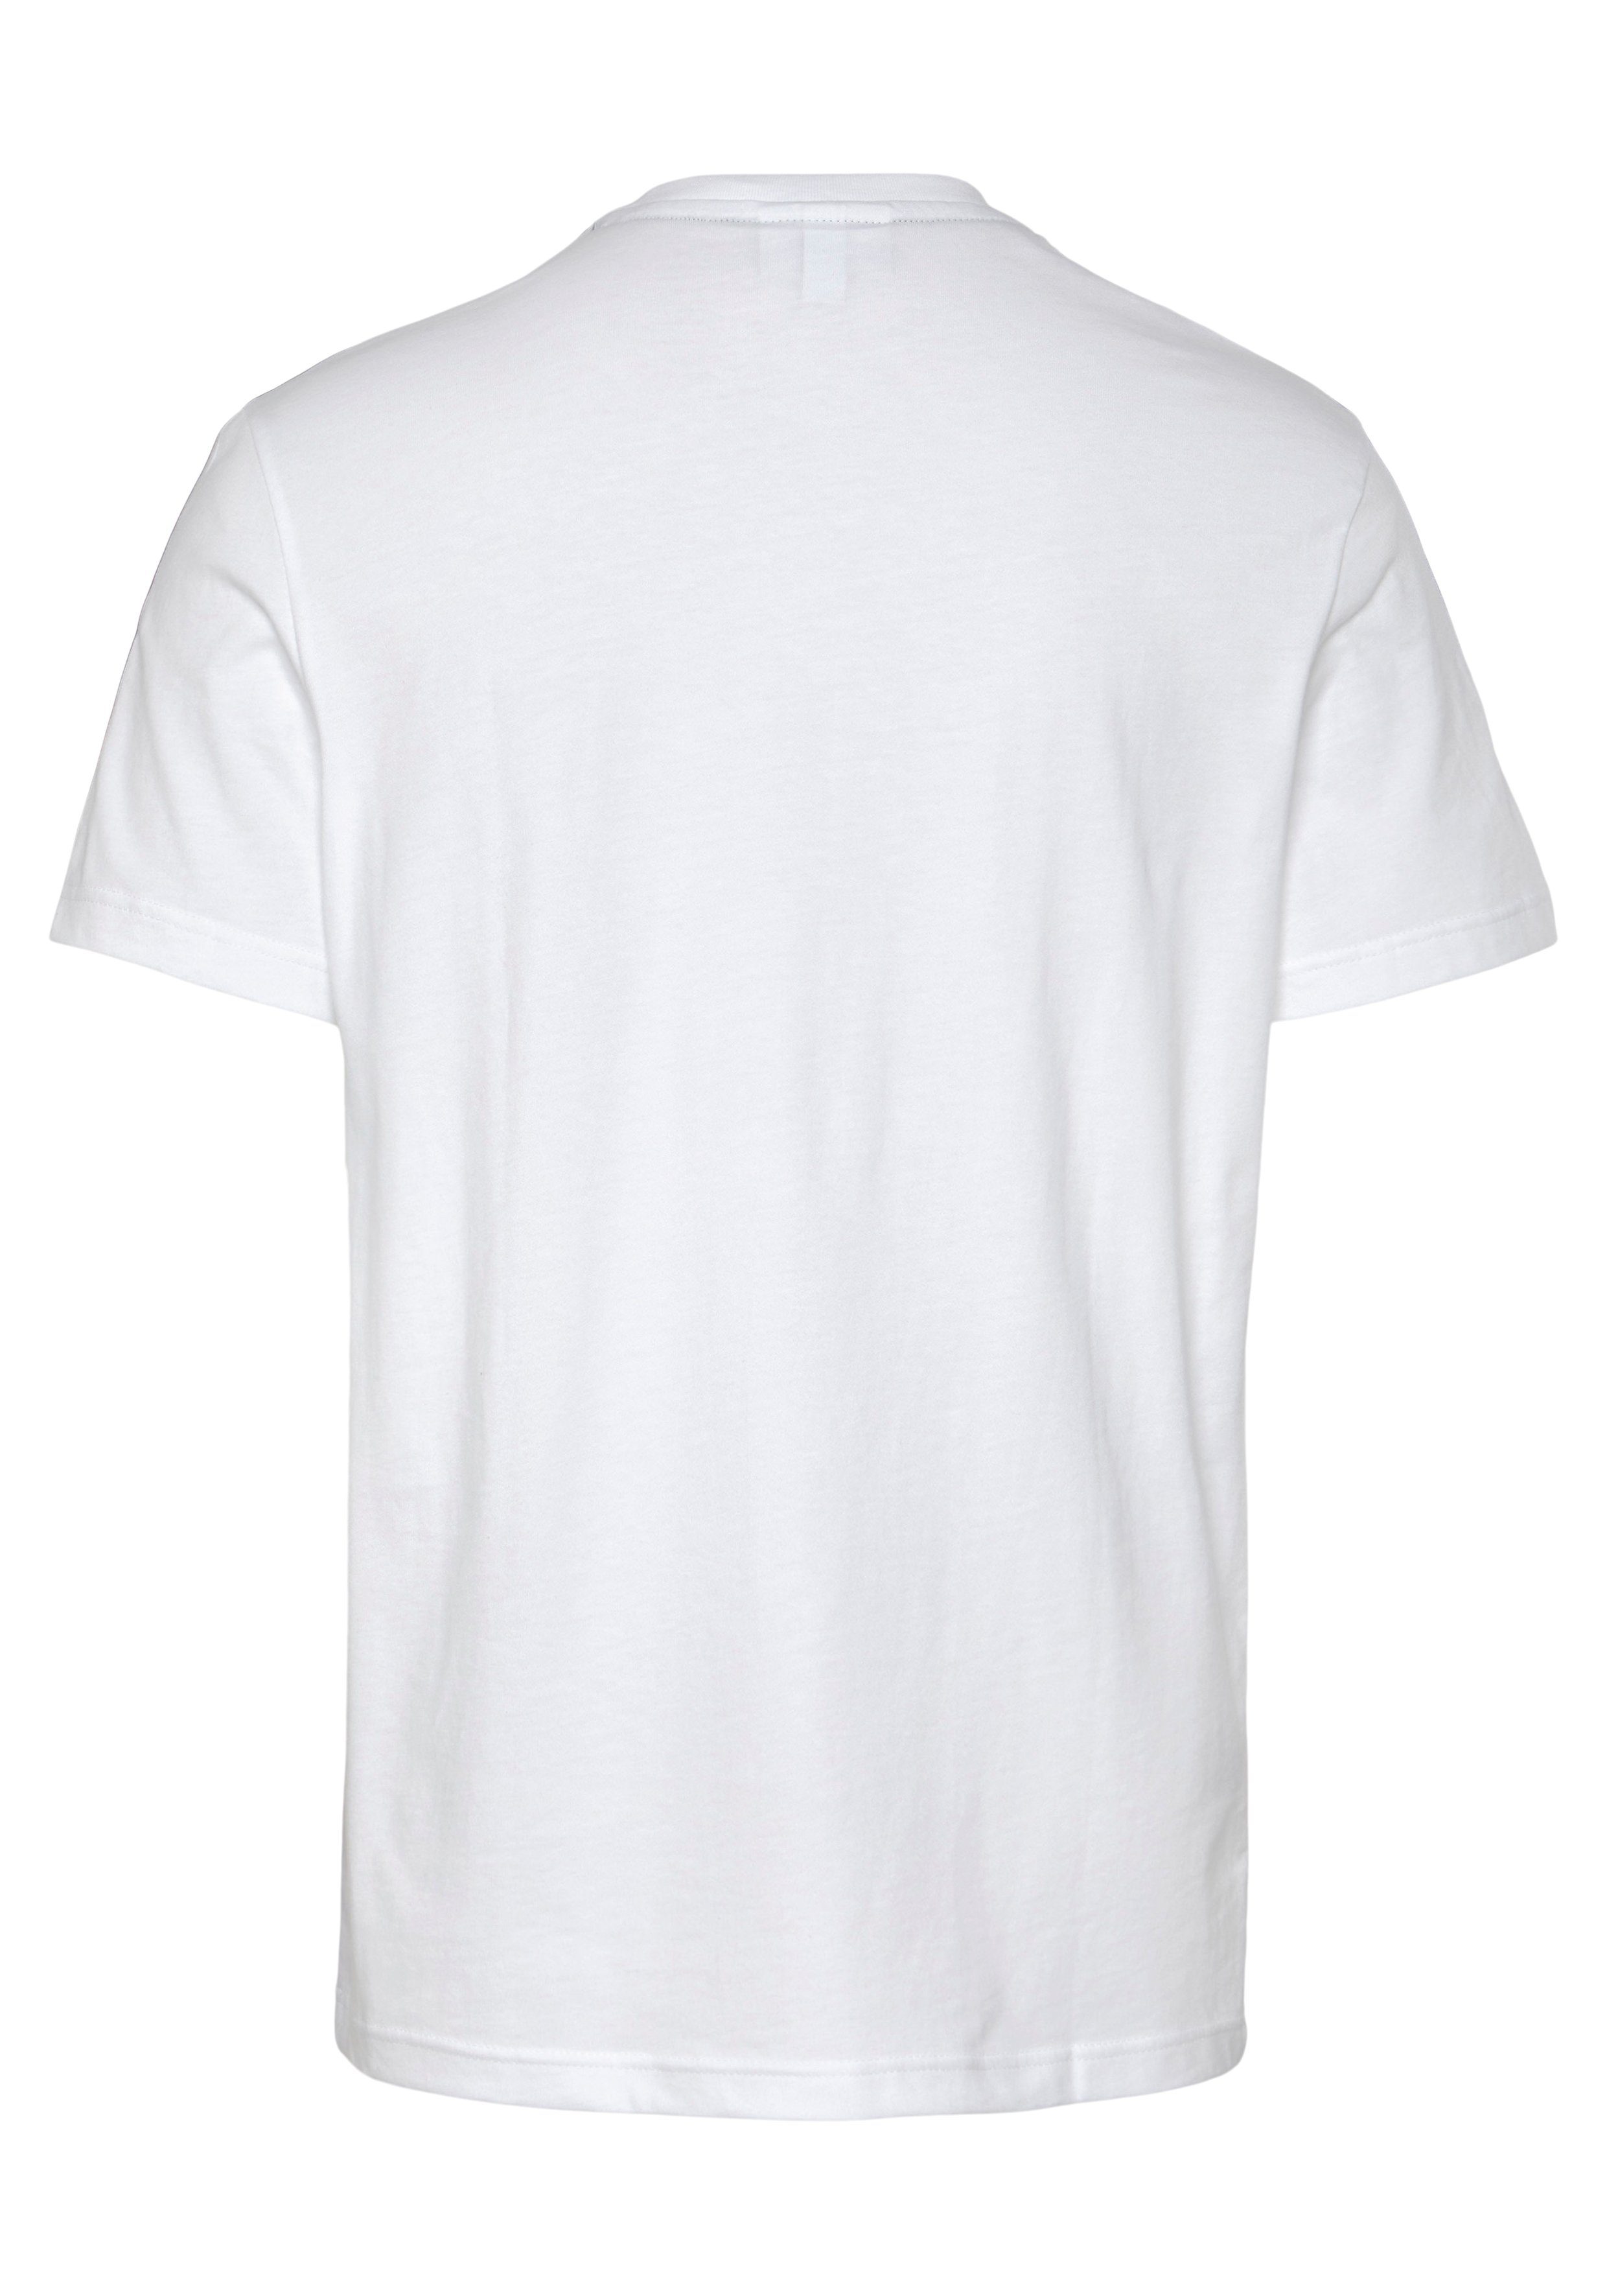 beschriftetem mit white Lacoste an Kontrastband den Schultern T-Shirt